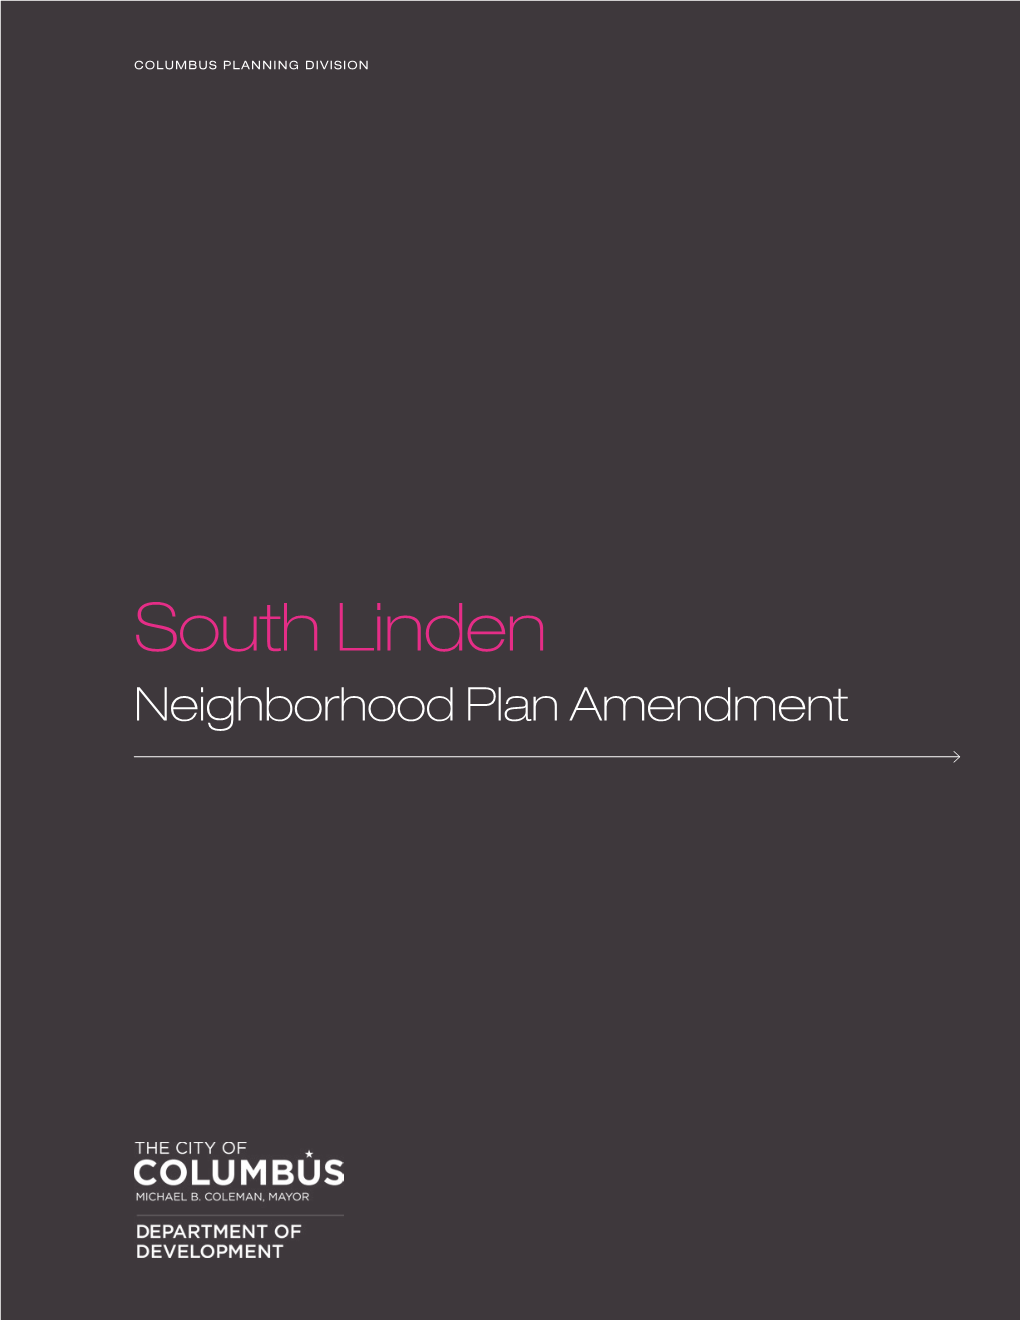 South Linden Neighborhood Plan Amendment the South Linden Neighborhood Plan Amendment Was Adopted by Columbus City Council on November 12, 2012